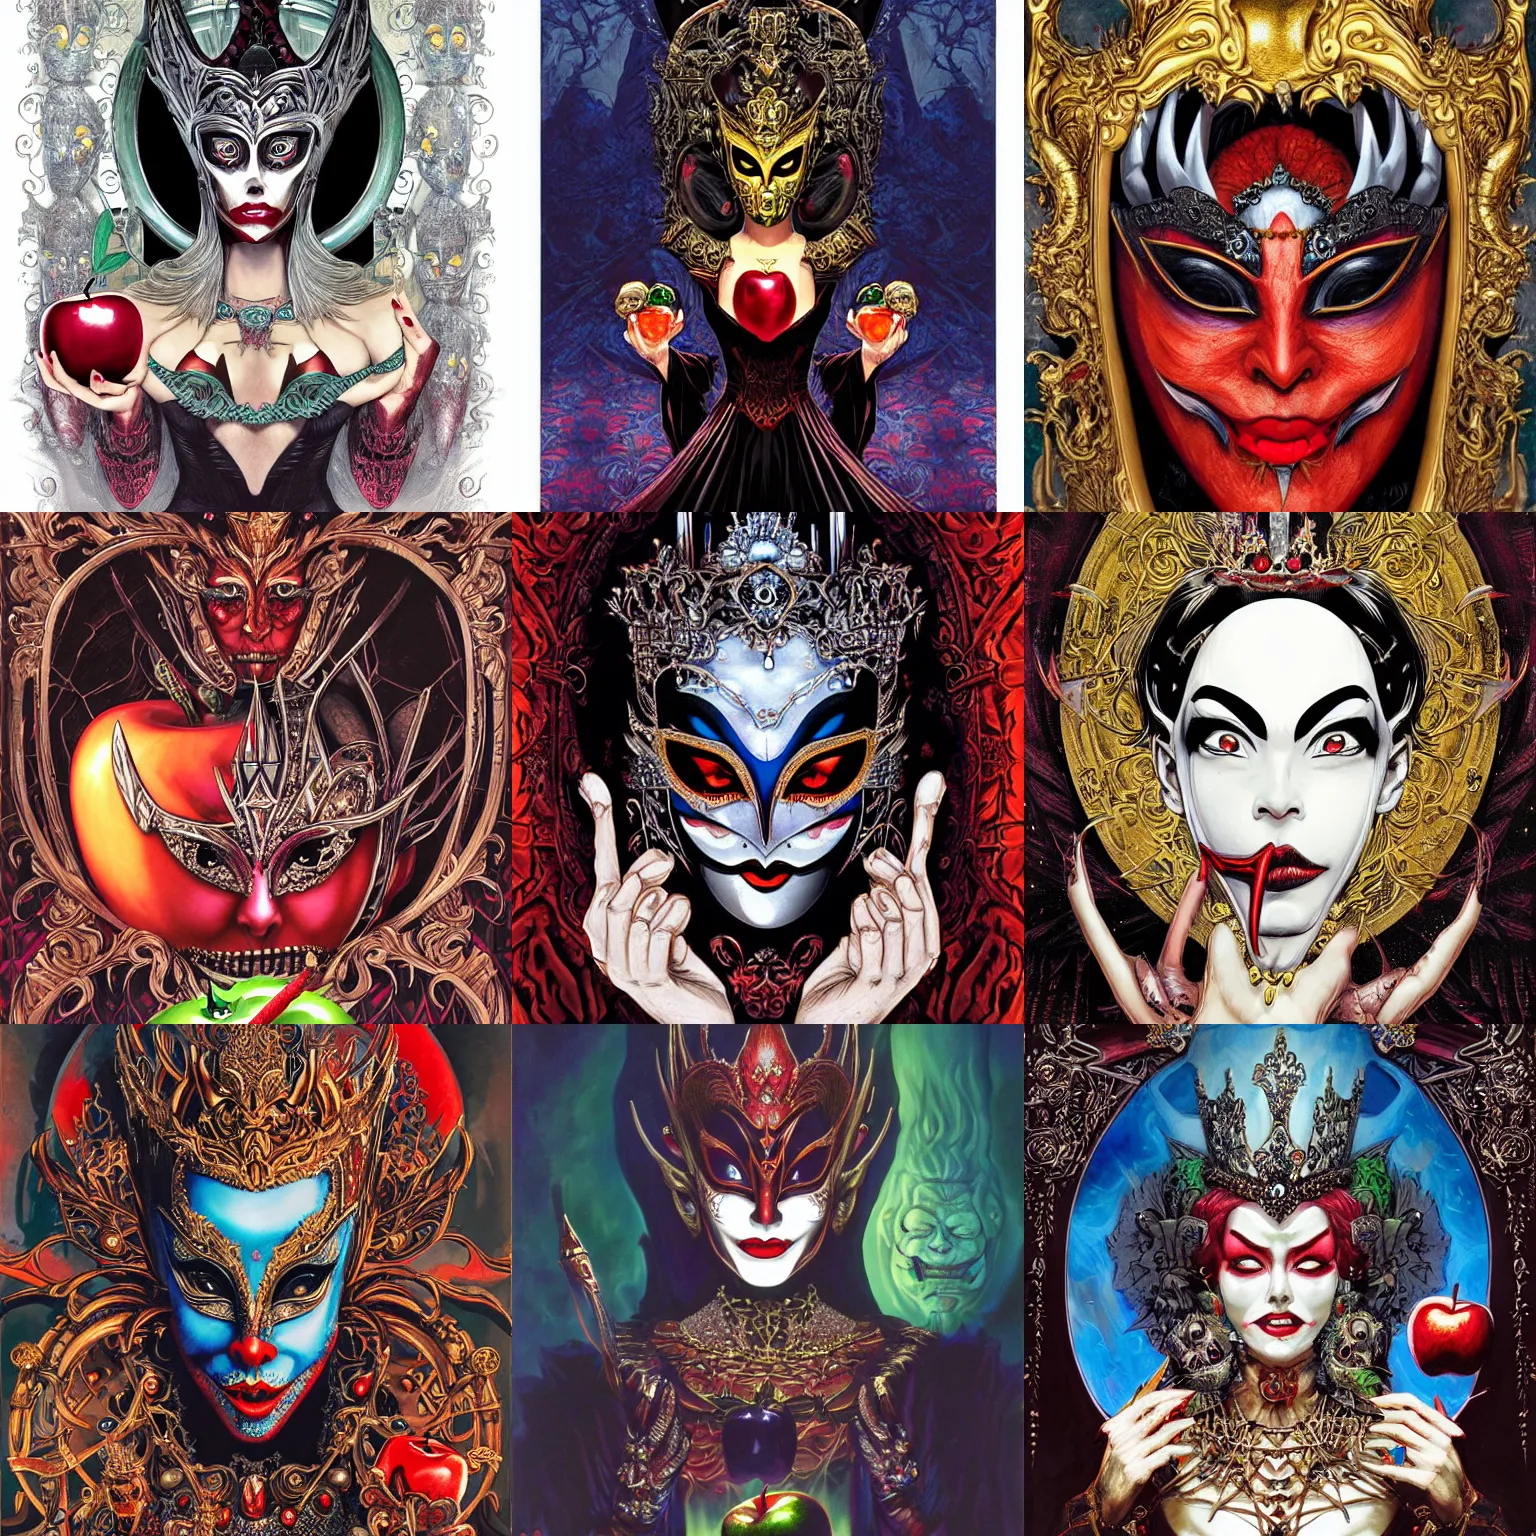 Prompt: potrait of a beautiful evil queen wearing a half - face metal carved mask is holding an apple facing the magic mirror, by masamune shirow, ayami kojima, josan gonzalez, yoshitaka amano, dan mumford, barclay shaw